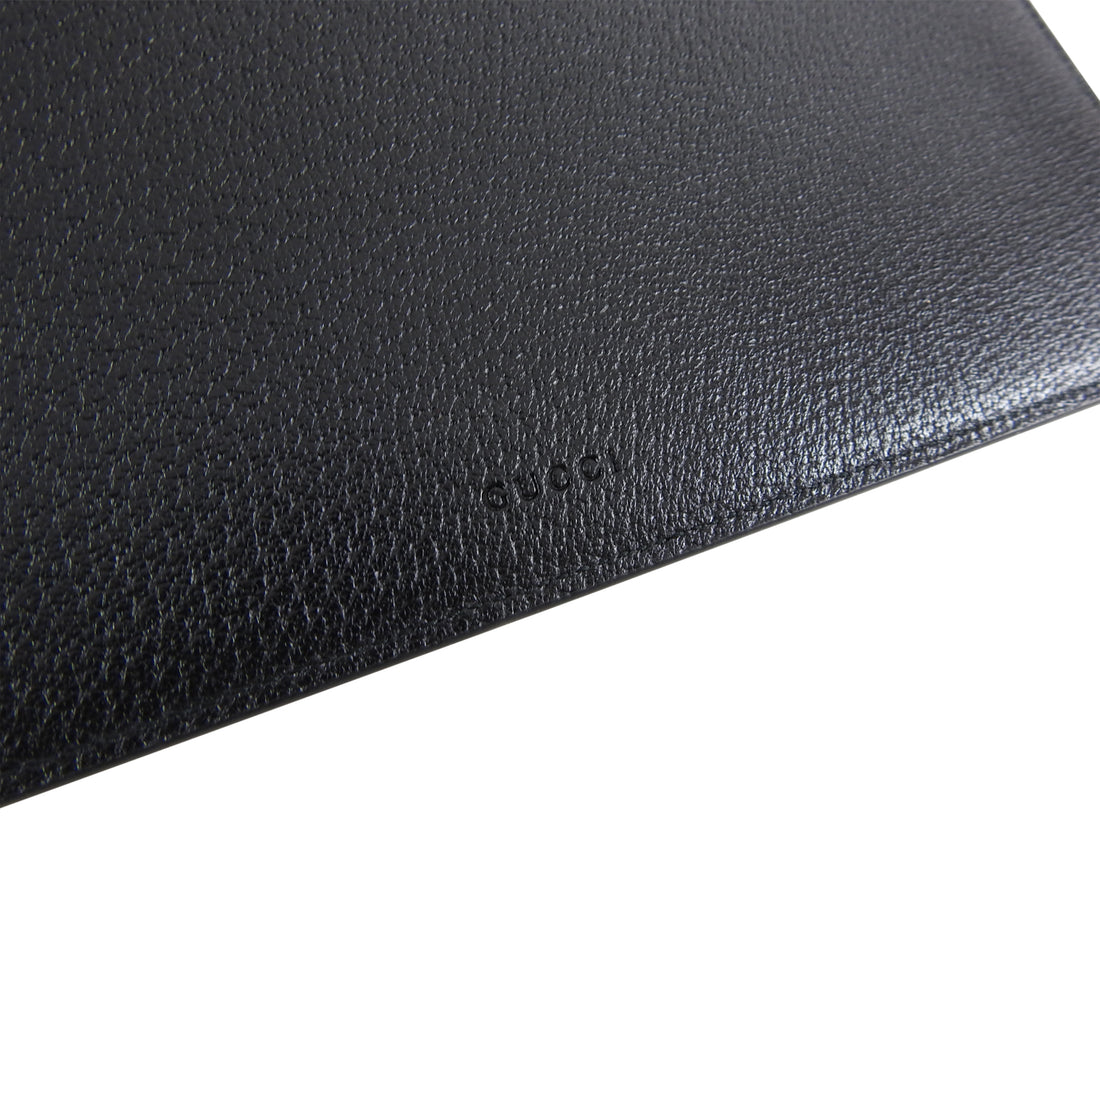 Gucci 2019 Marmont Black Leather GG Portfolio Clutch Bag 